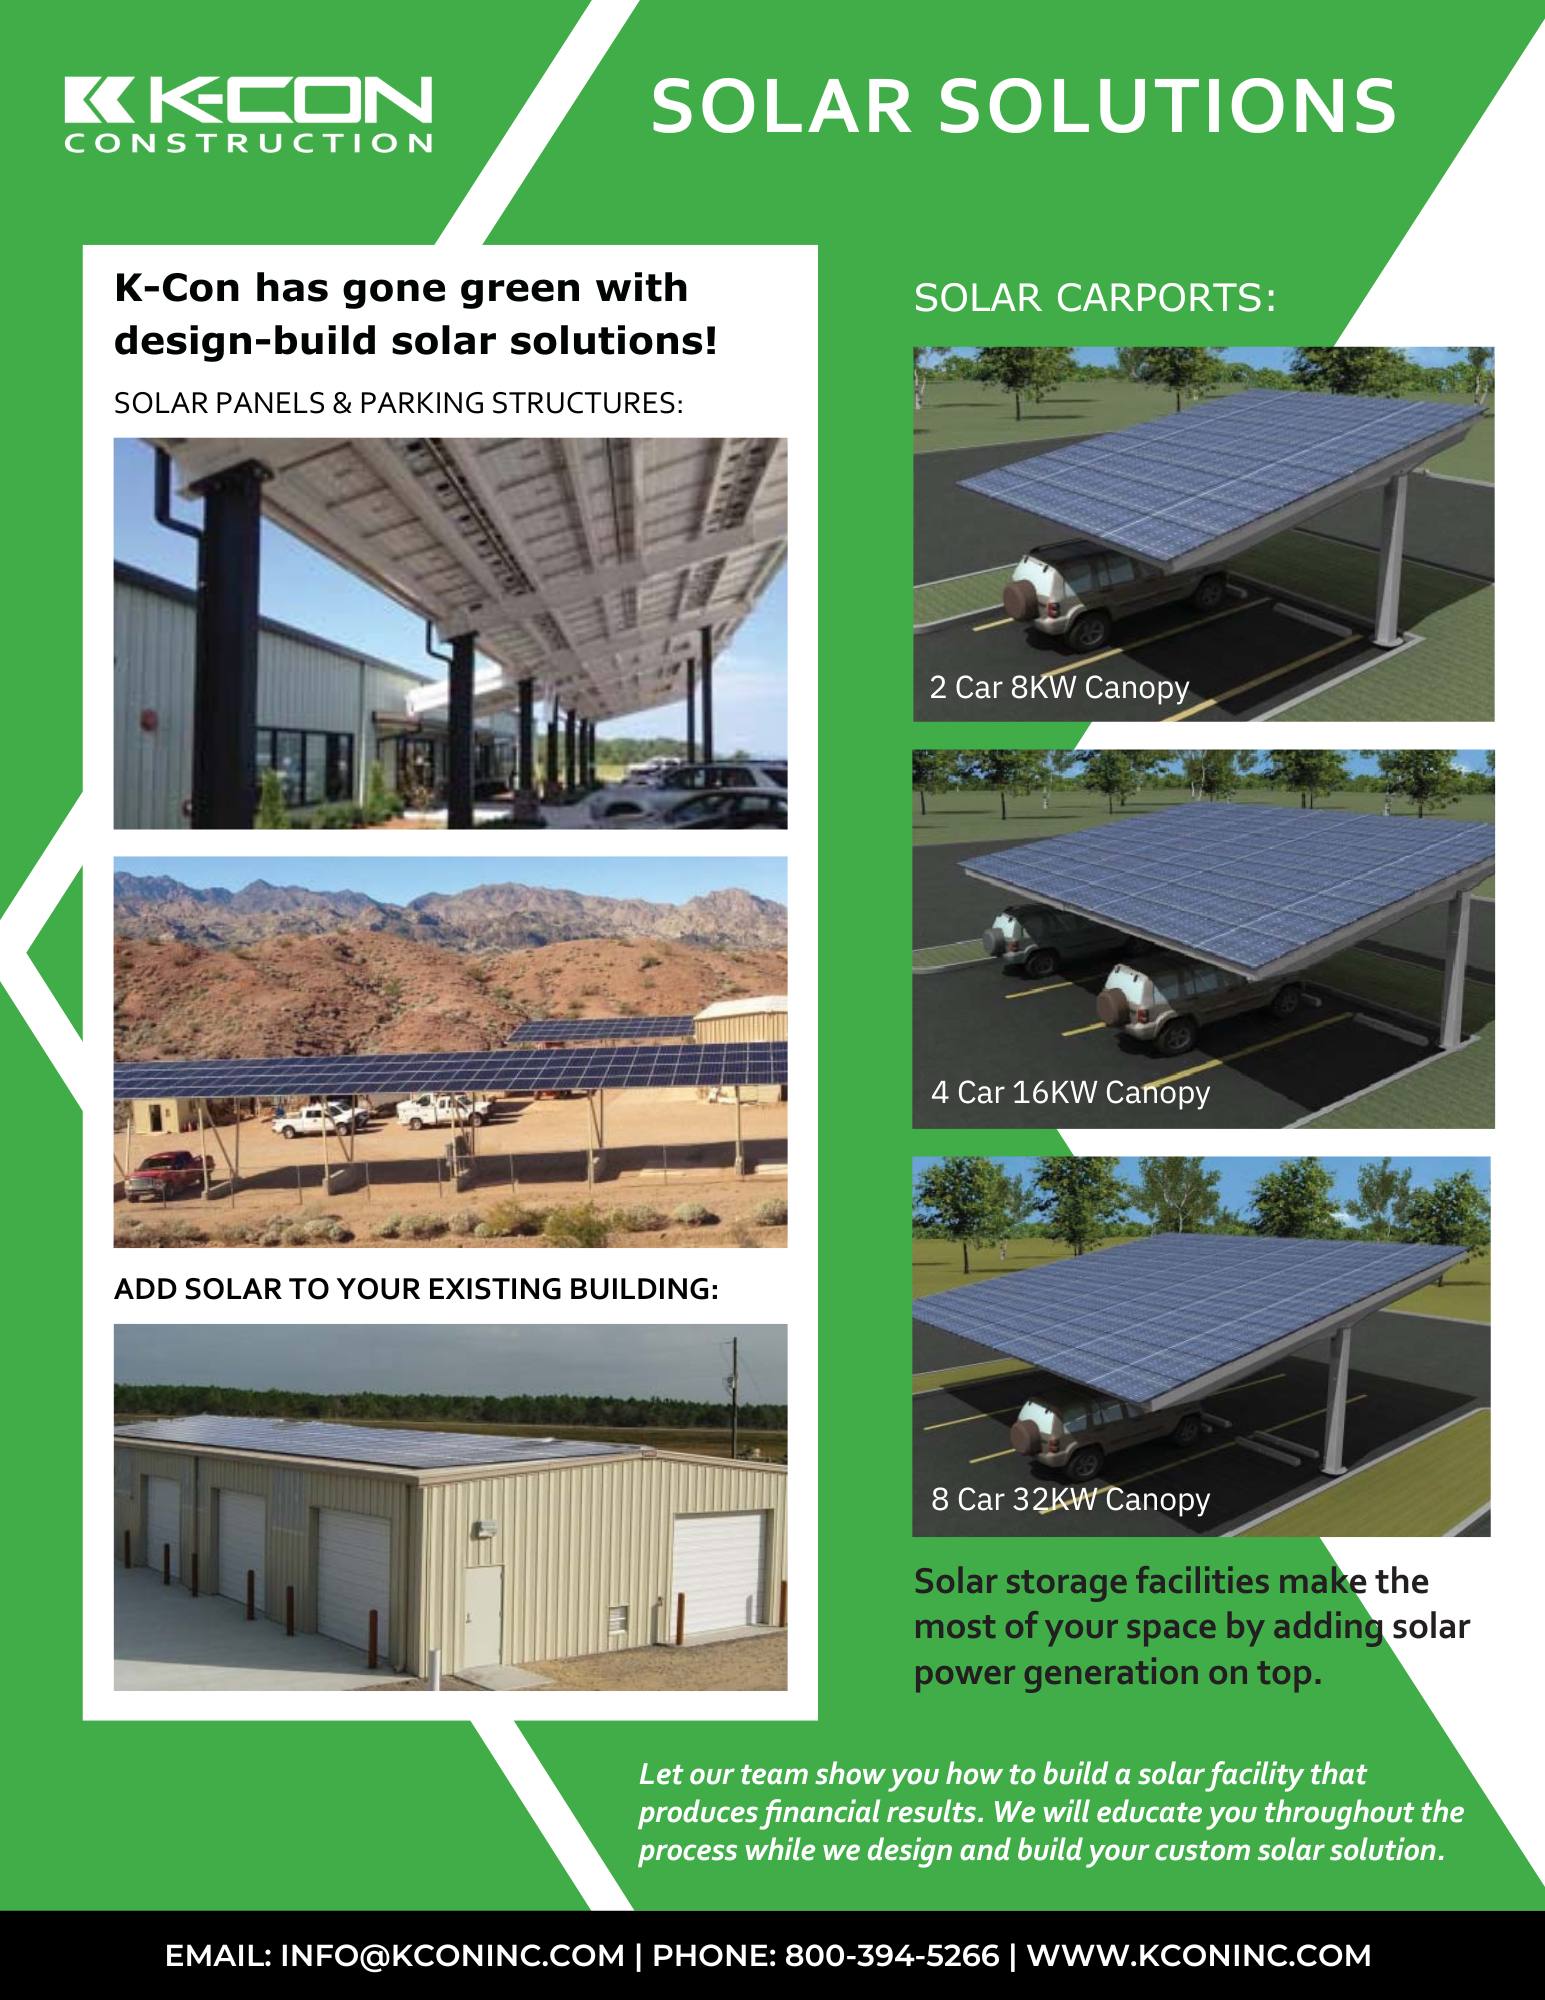 KCON Solar Carports & Solutions